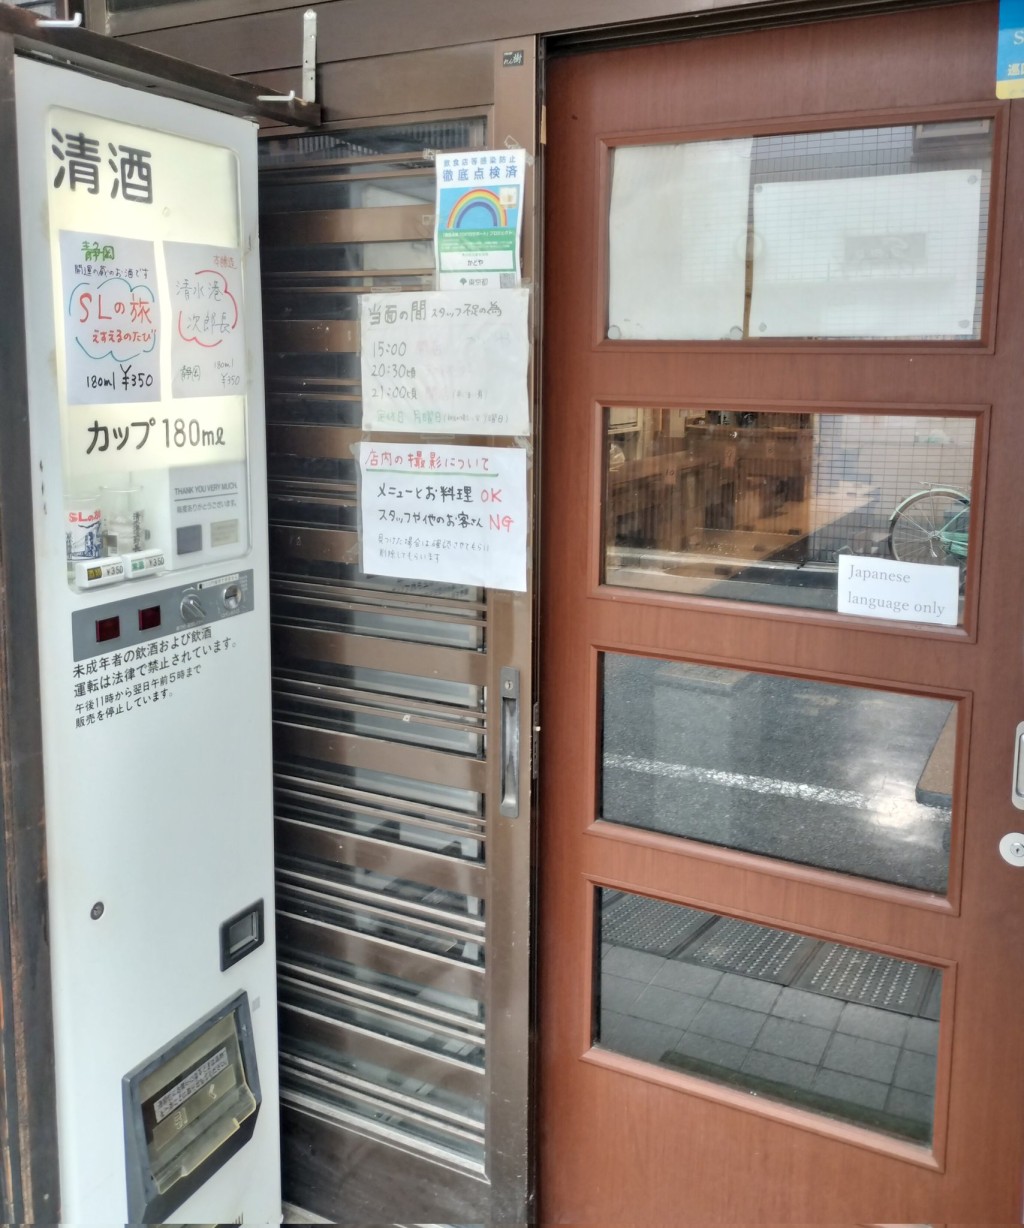 東京居酒屋「かどや」（Kadoya）入口貼出多張告示。 X